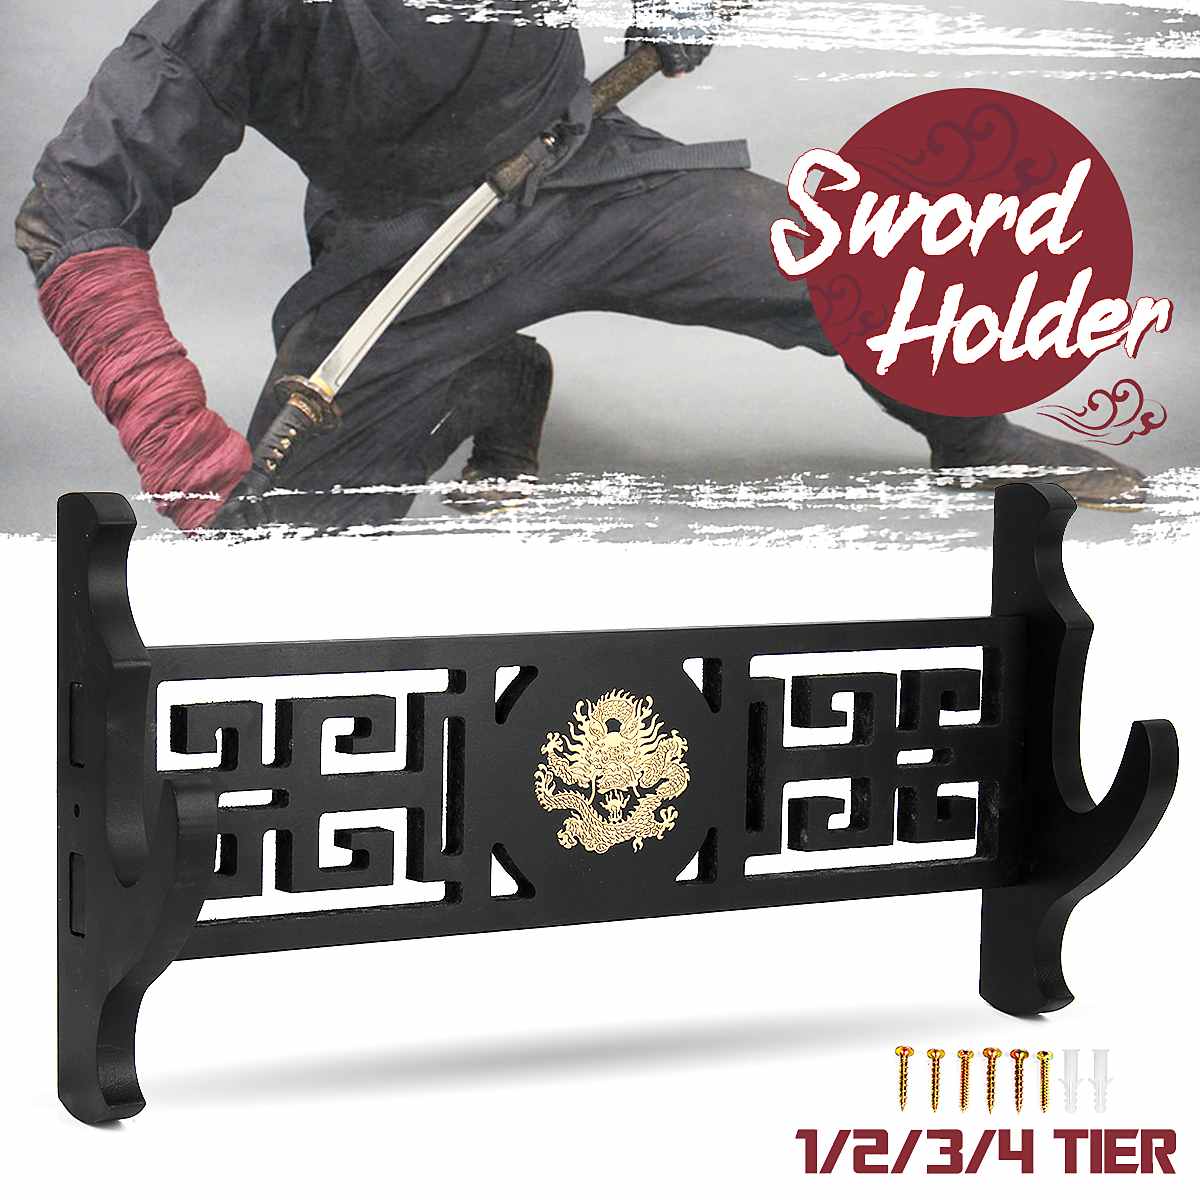 Real Wood Katana Samurai Sword Holder Stand Wall Mount Bracket Hanger 2 Layer 